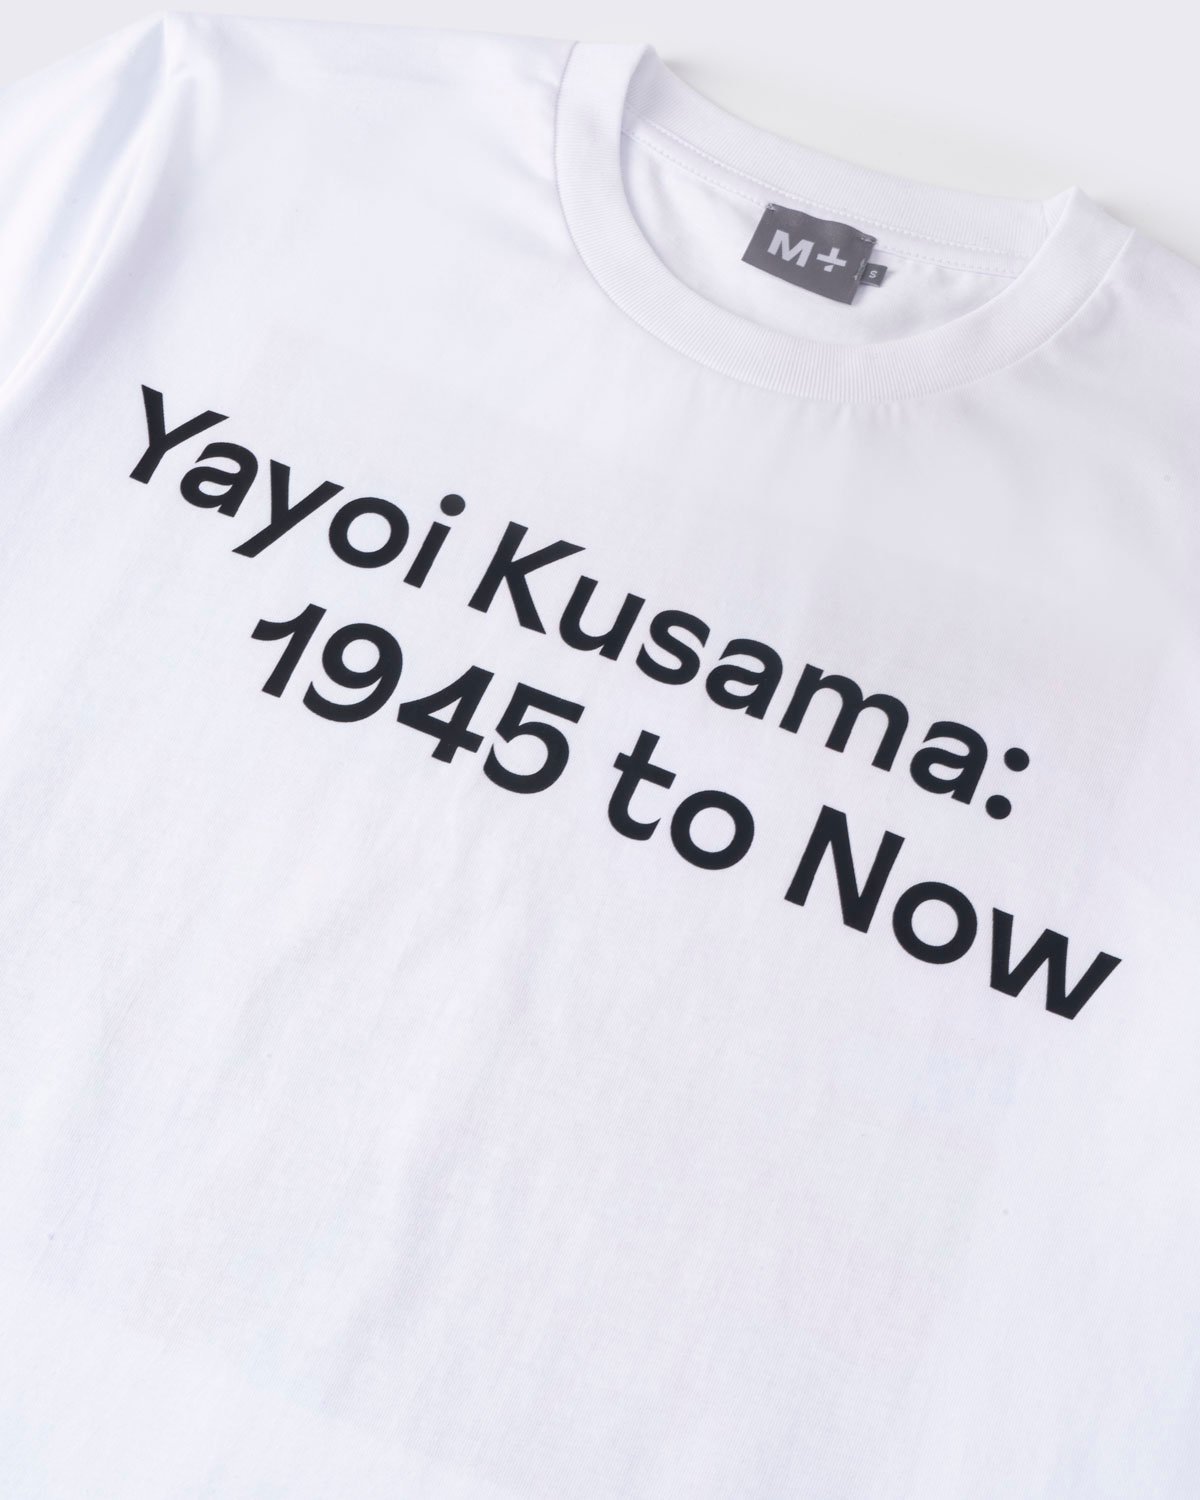 Yayoi Kusama 'Memories of An Exciting Love' T-Shirt